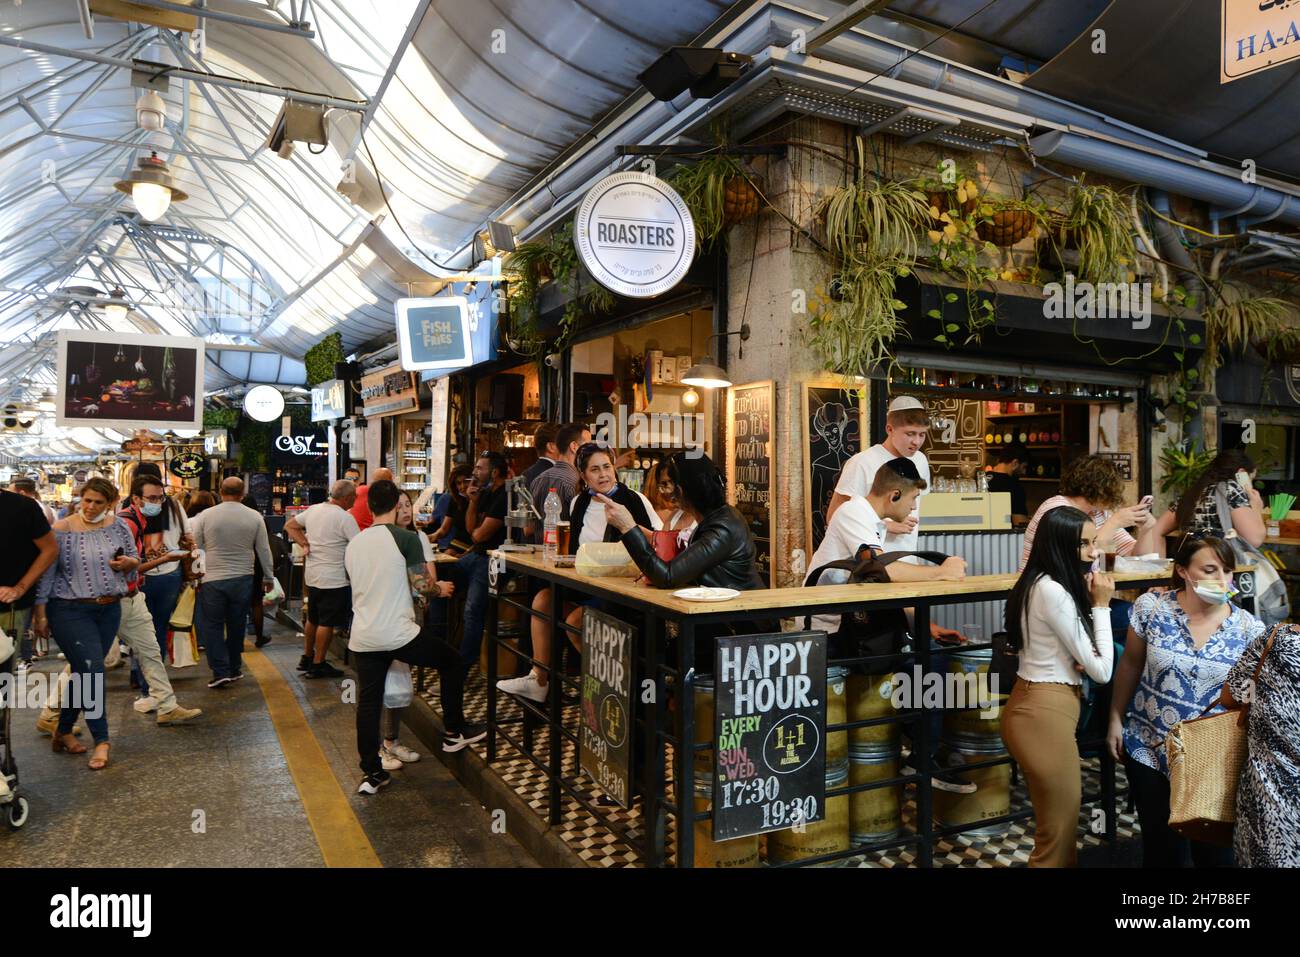 Roasters coffee shop and bar at the vibrant Mahane Yehuda market in Jerusalem, Israel. Stock Photo